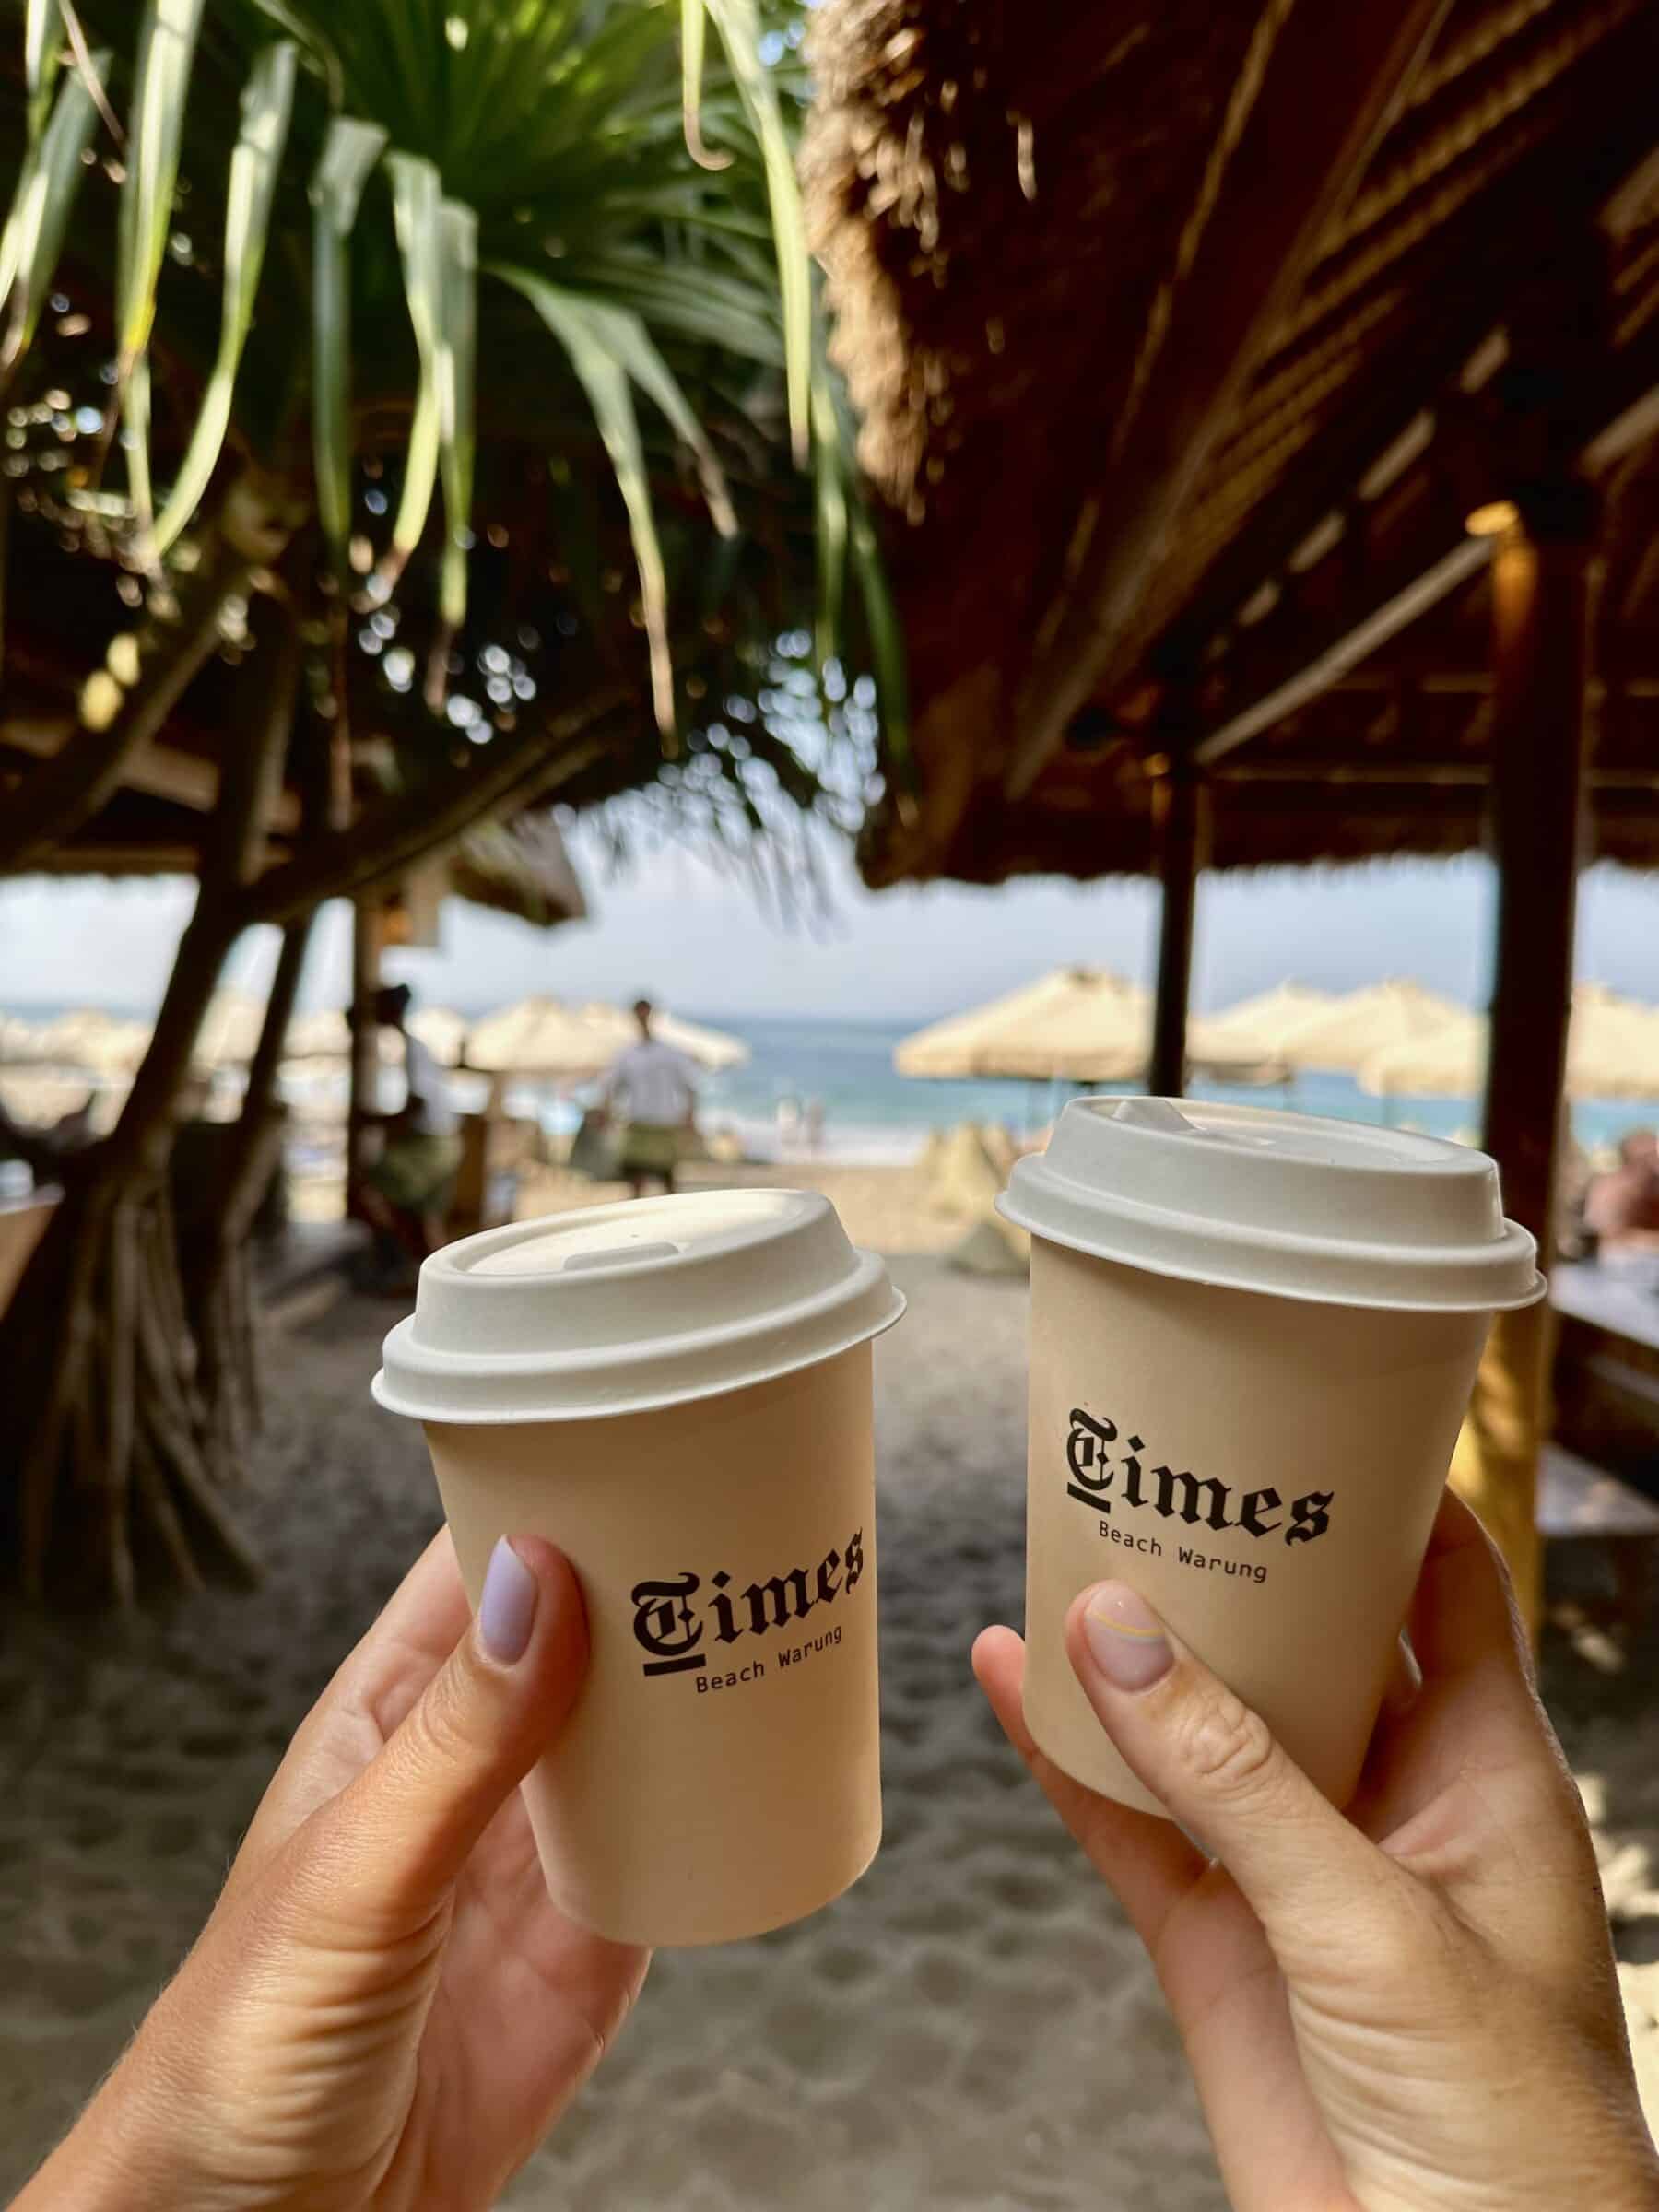 Times beach warung kaffe batu bolong canggu bali